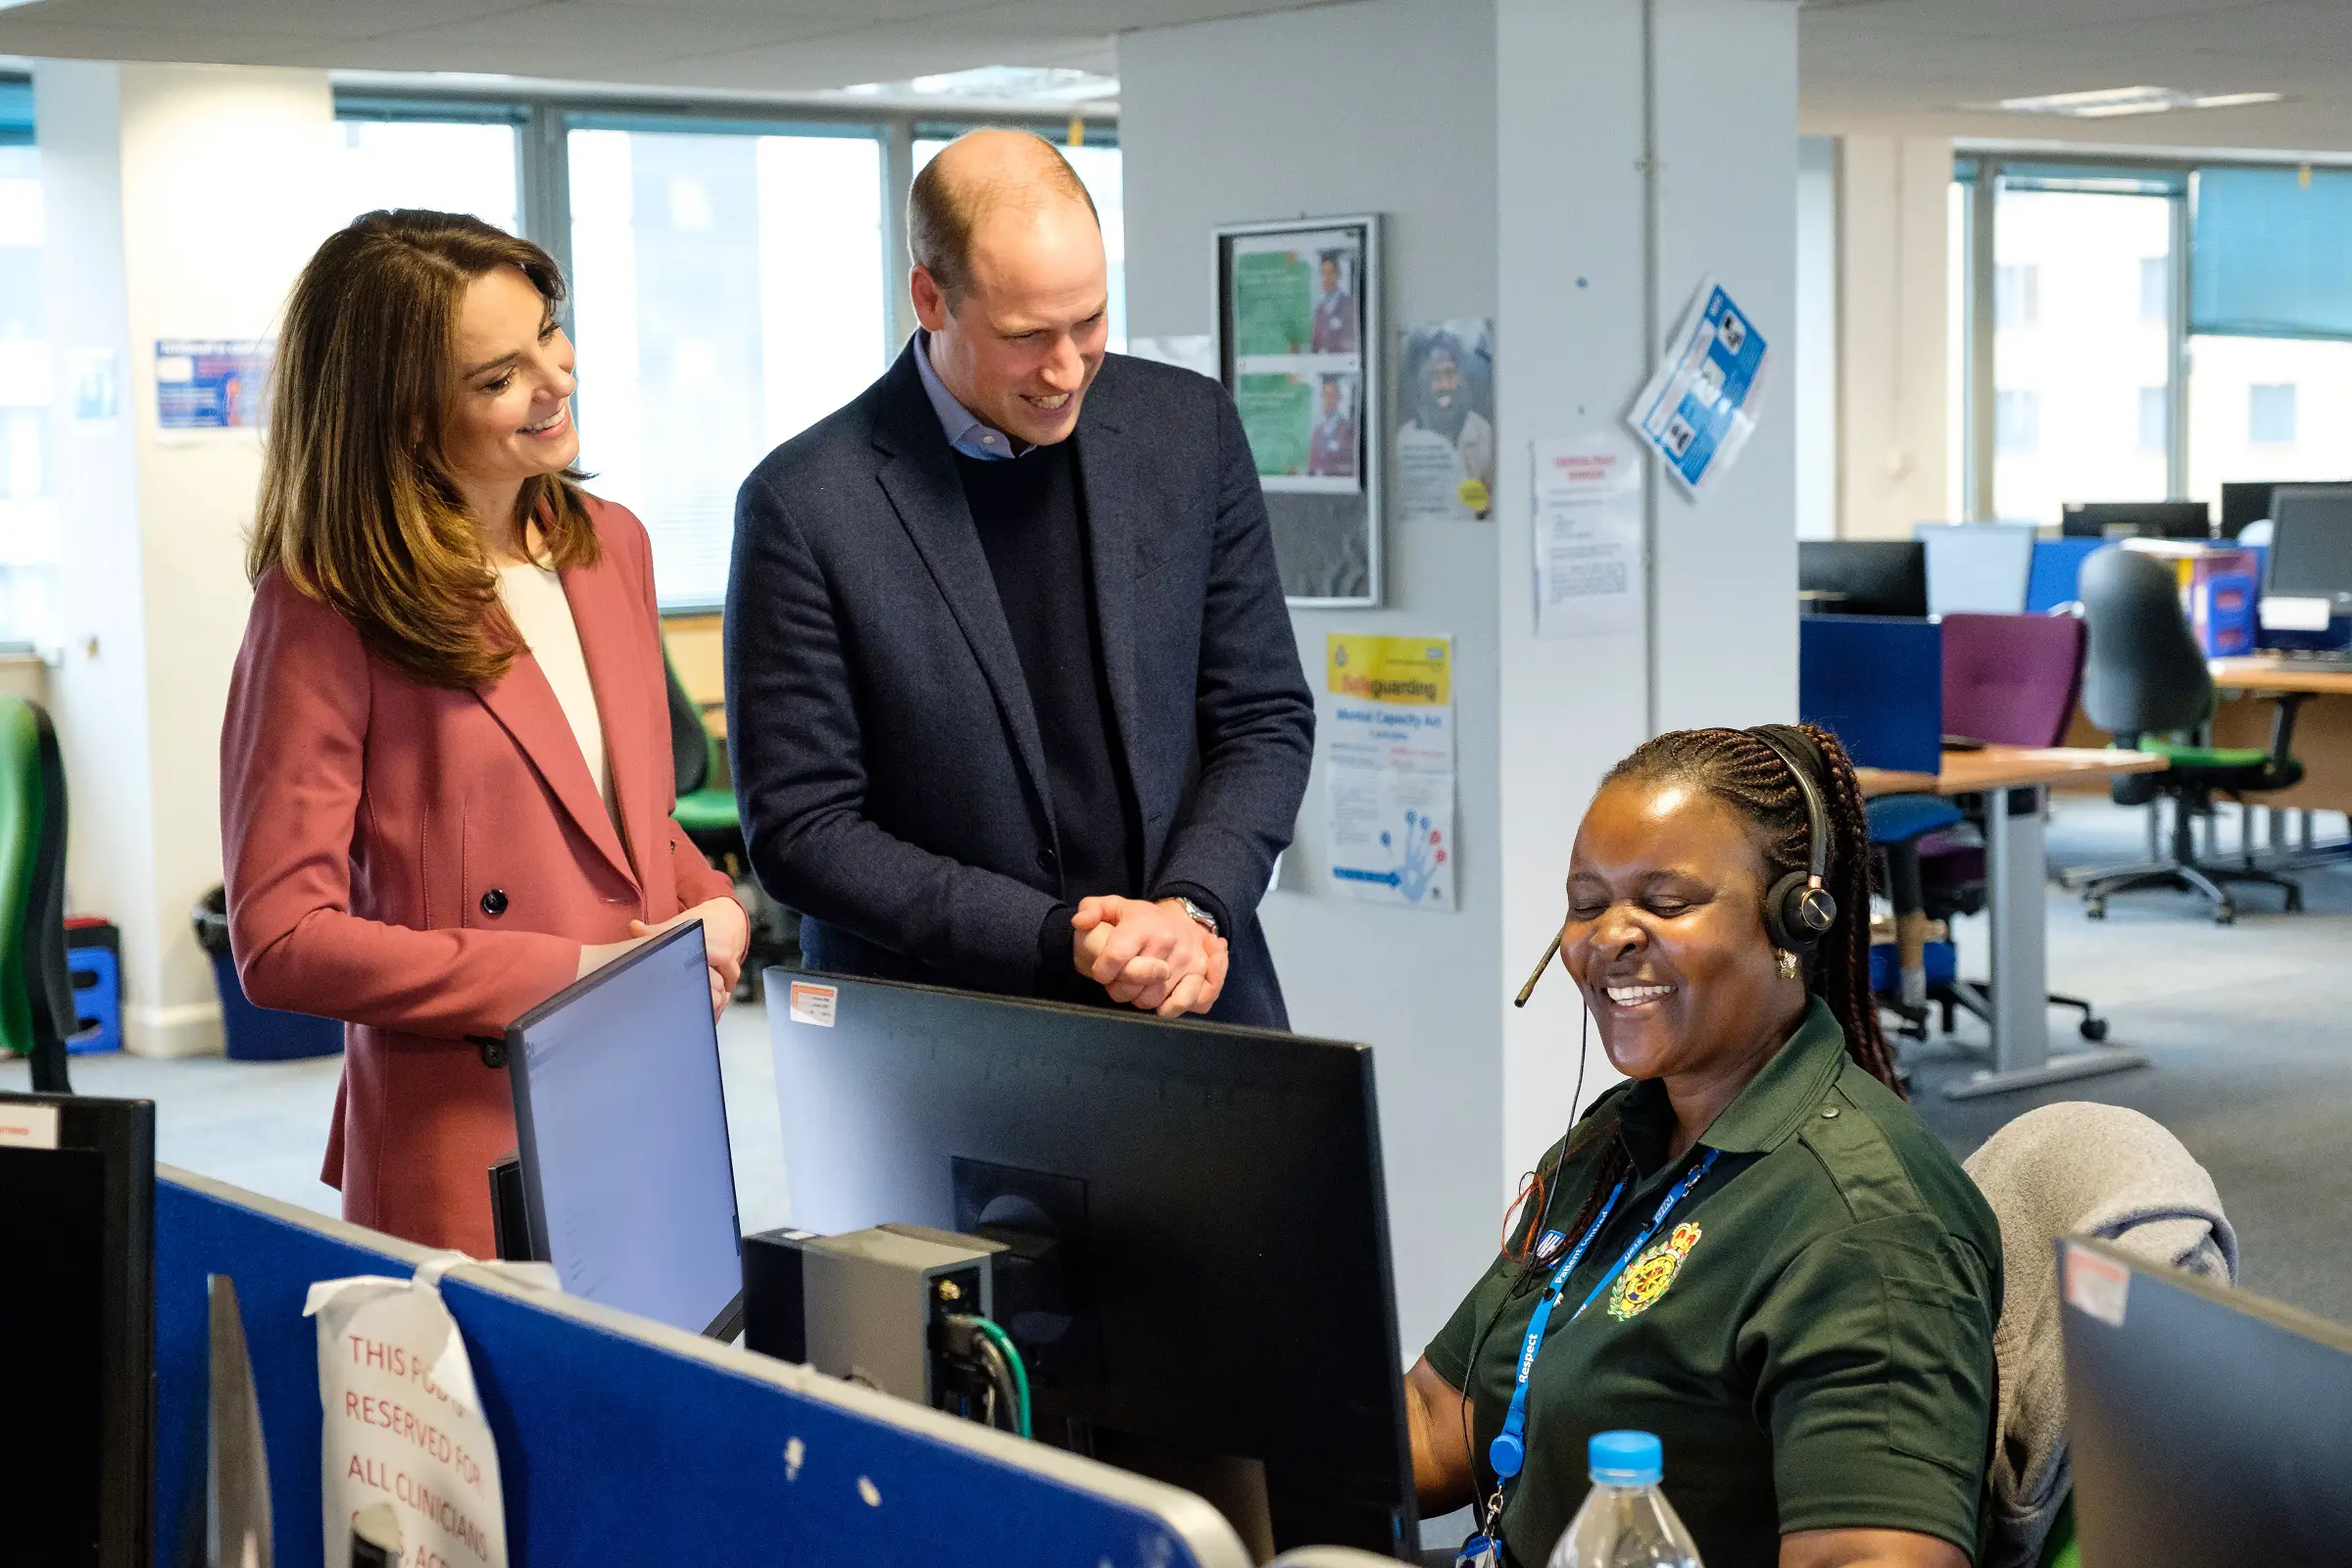 Duke and Duchess of Cambridge visited London Abulance Service